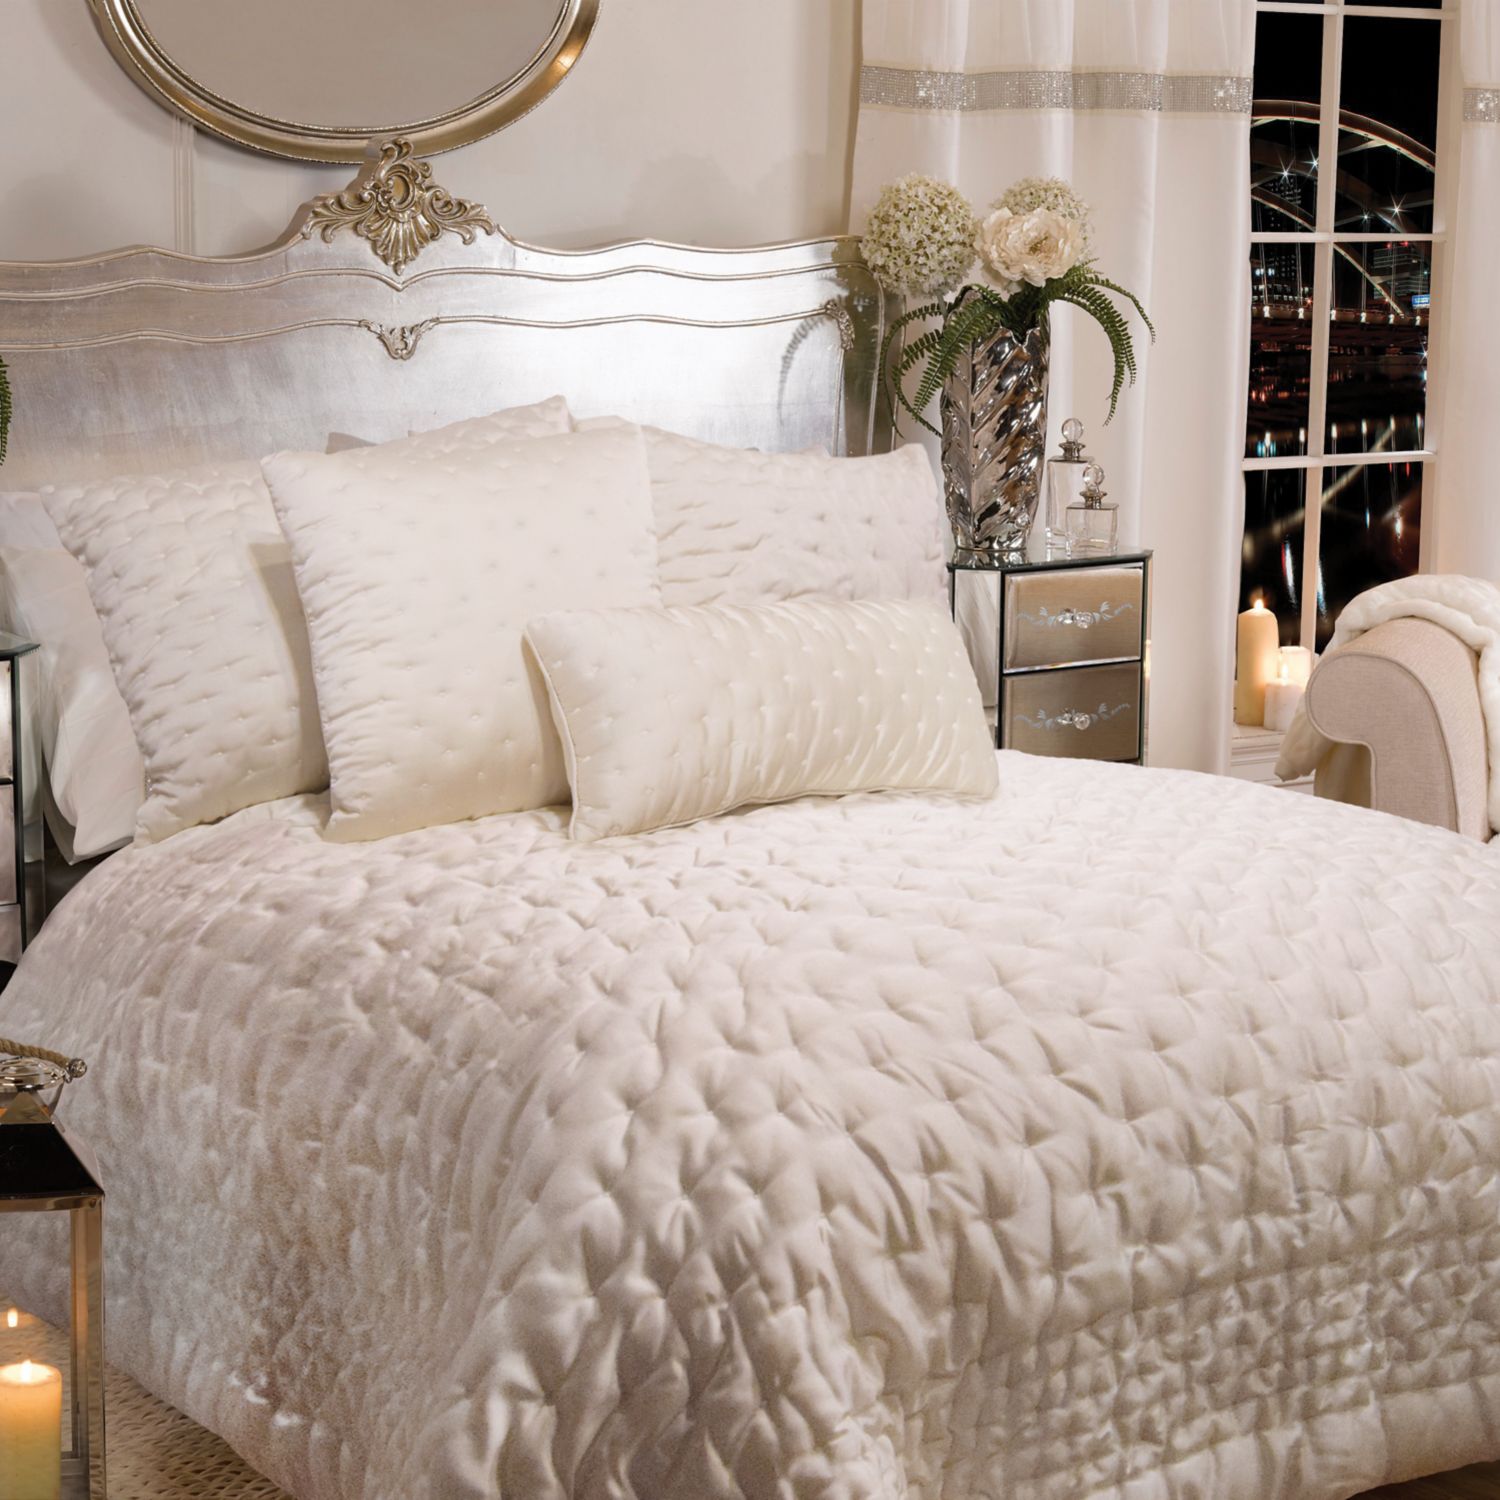 Image for Donna Sharp Almond Blossom Comforter at Kohl's.